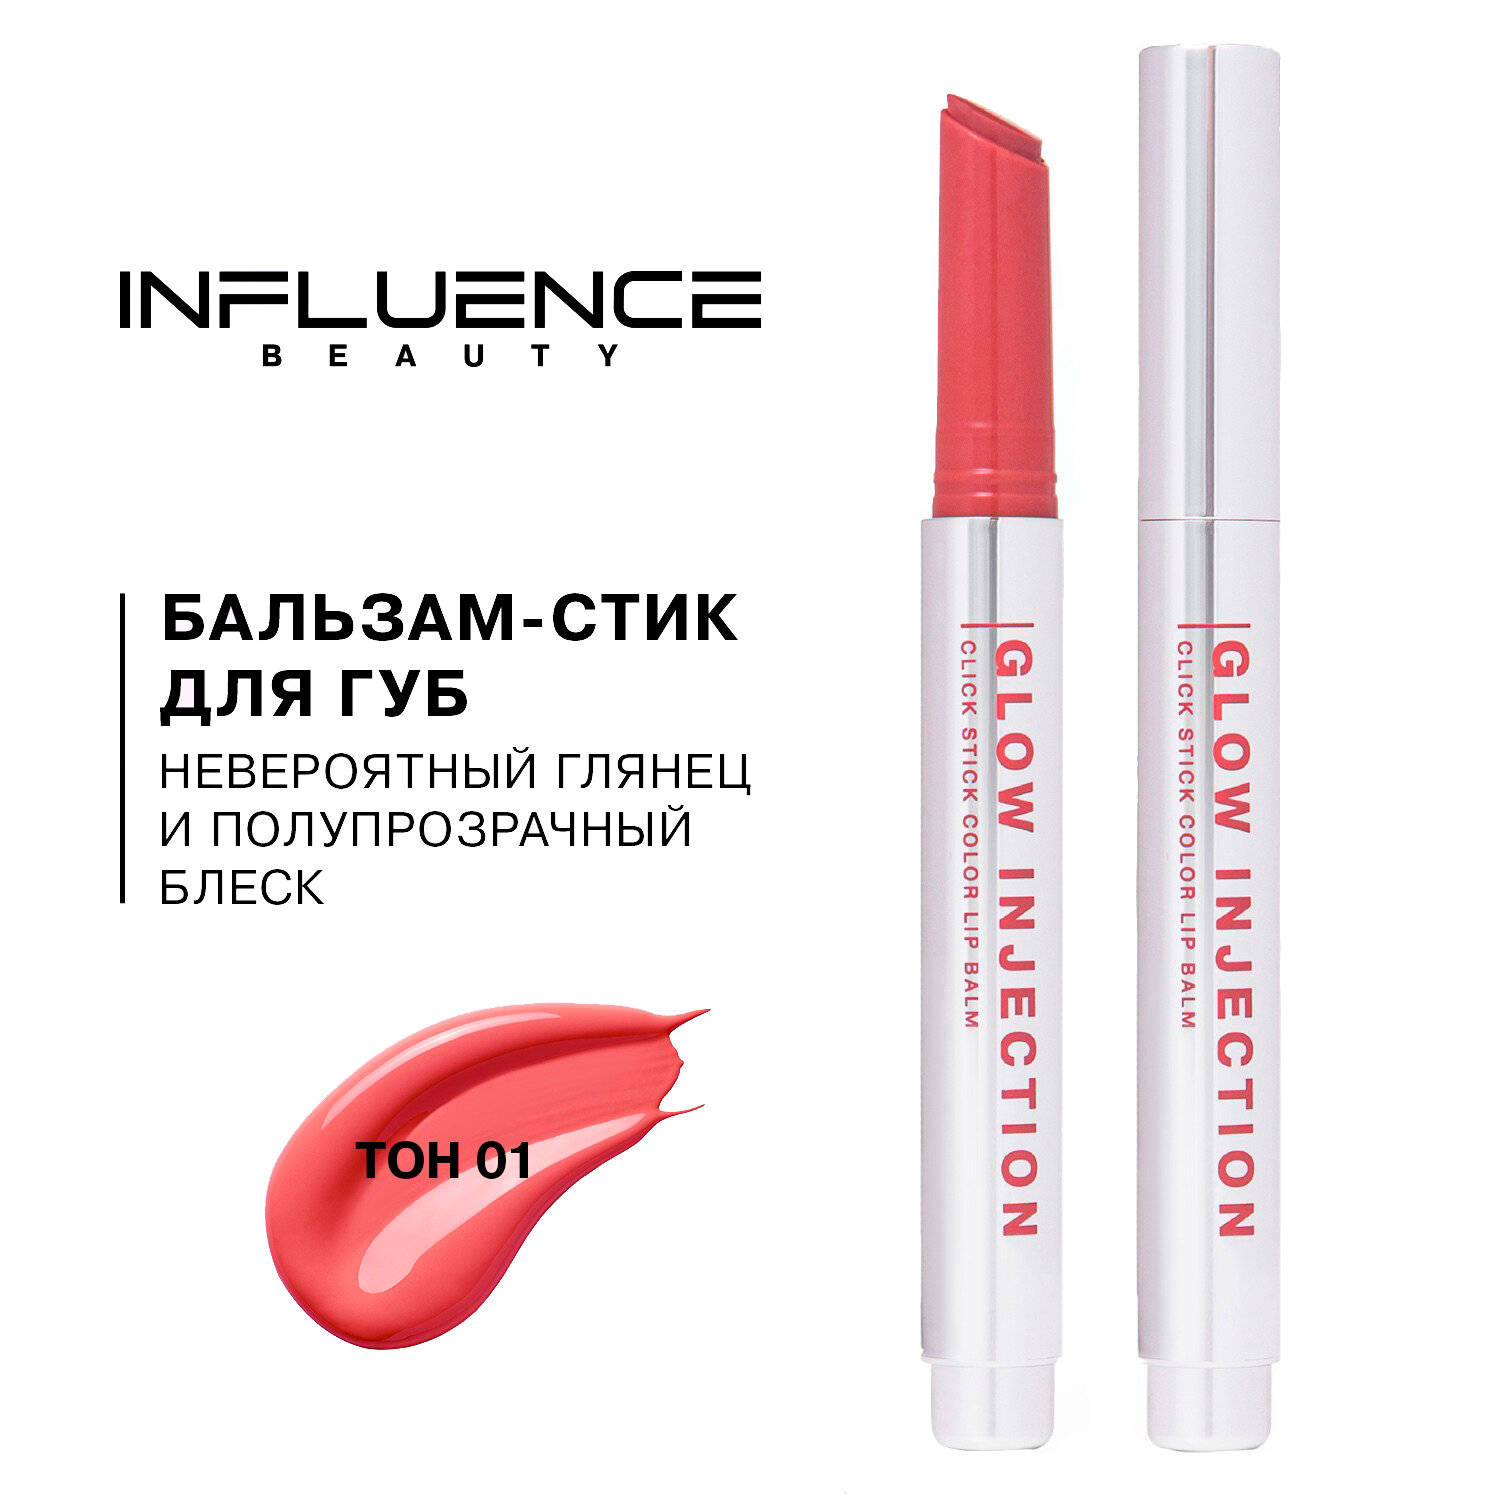 Influence Beauty Бальзам-стик для губ / Lipstick Balm Glow Injection тон 01